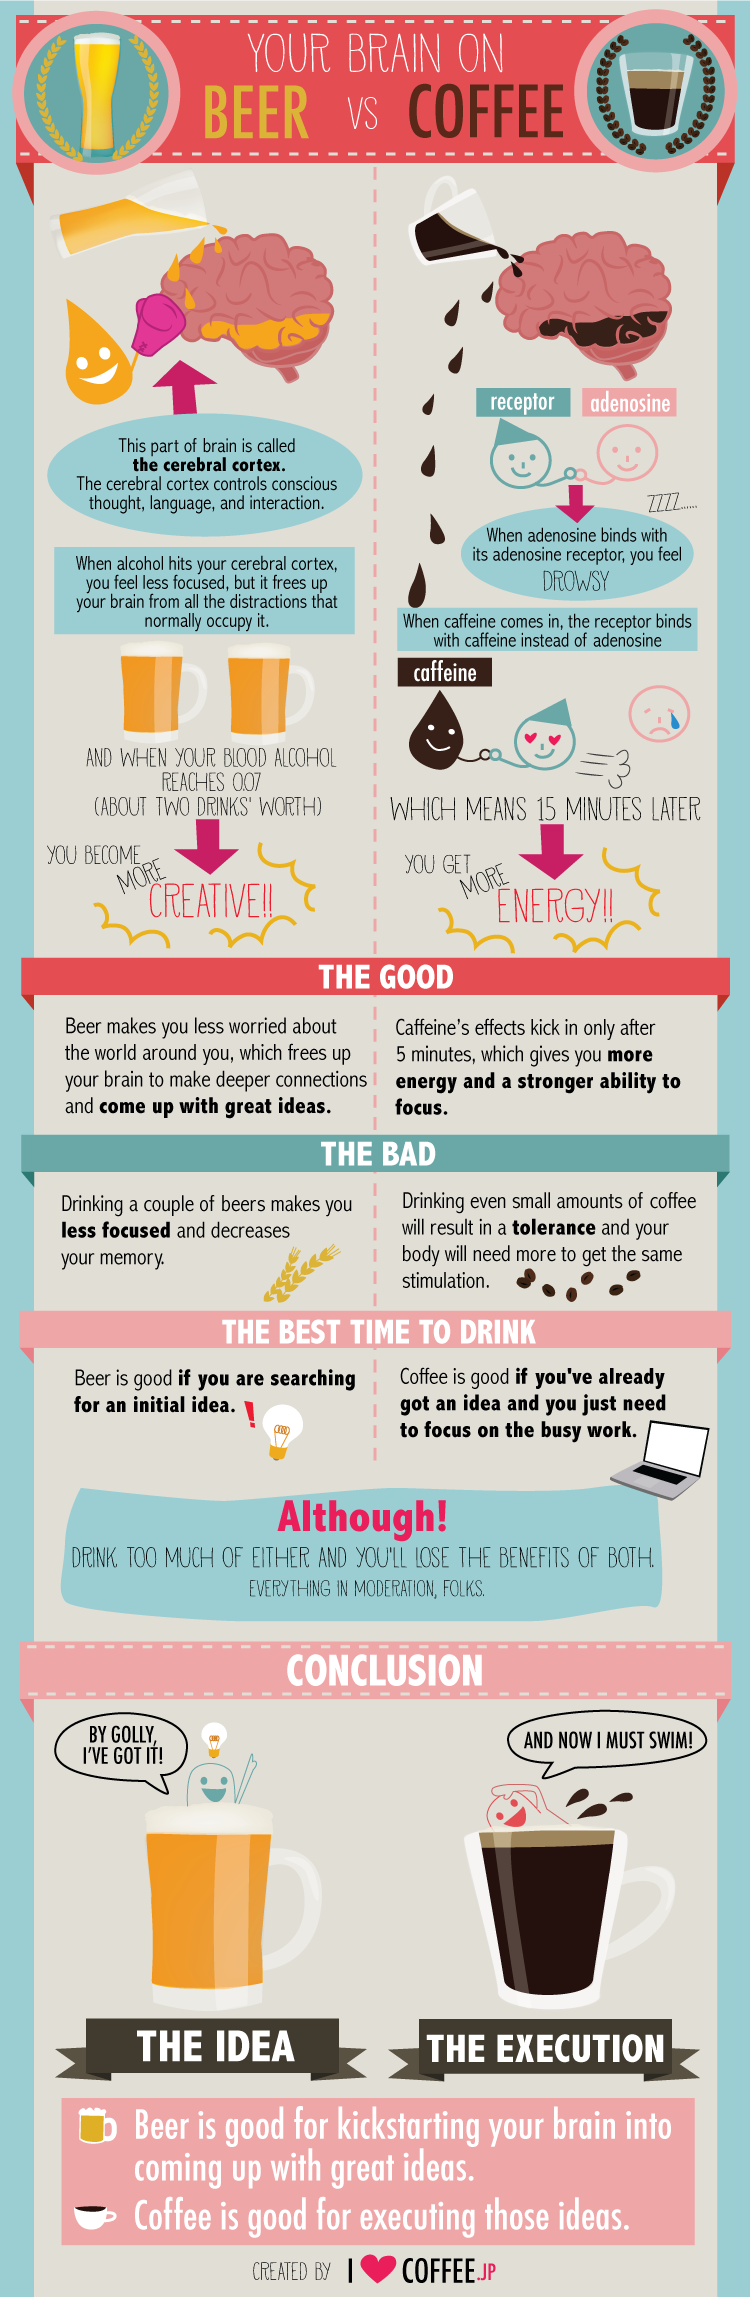 Beer Brain Vs Coffee Brain: The Scientific Truth - Infographic